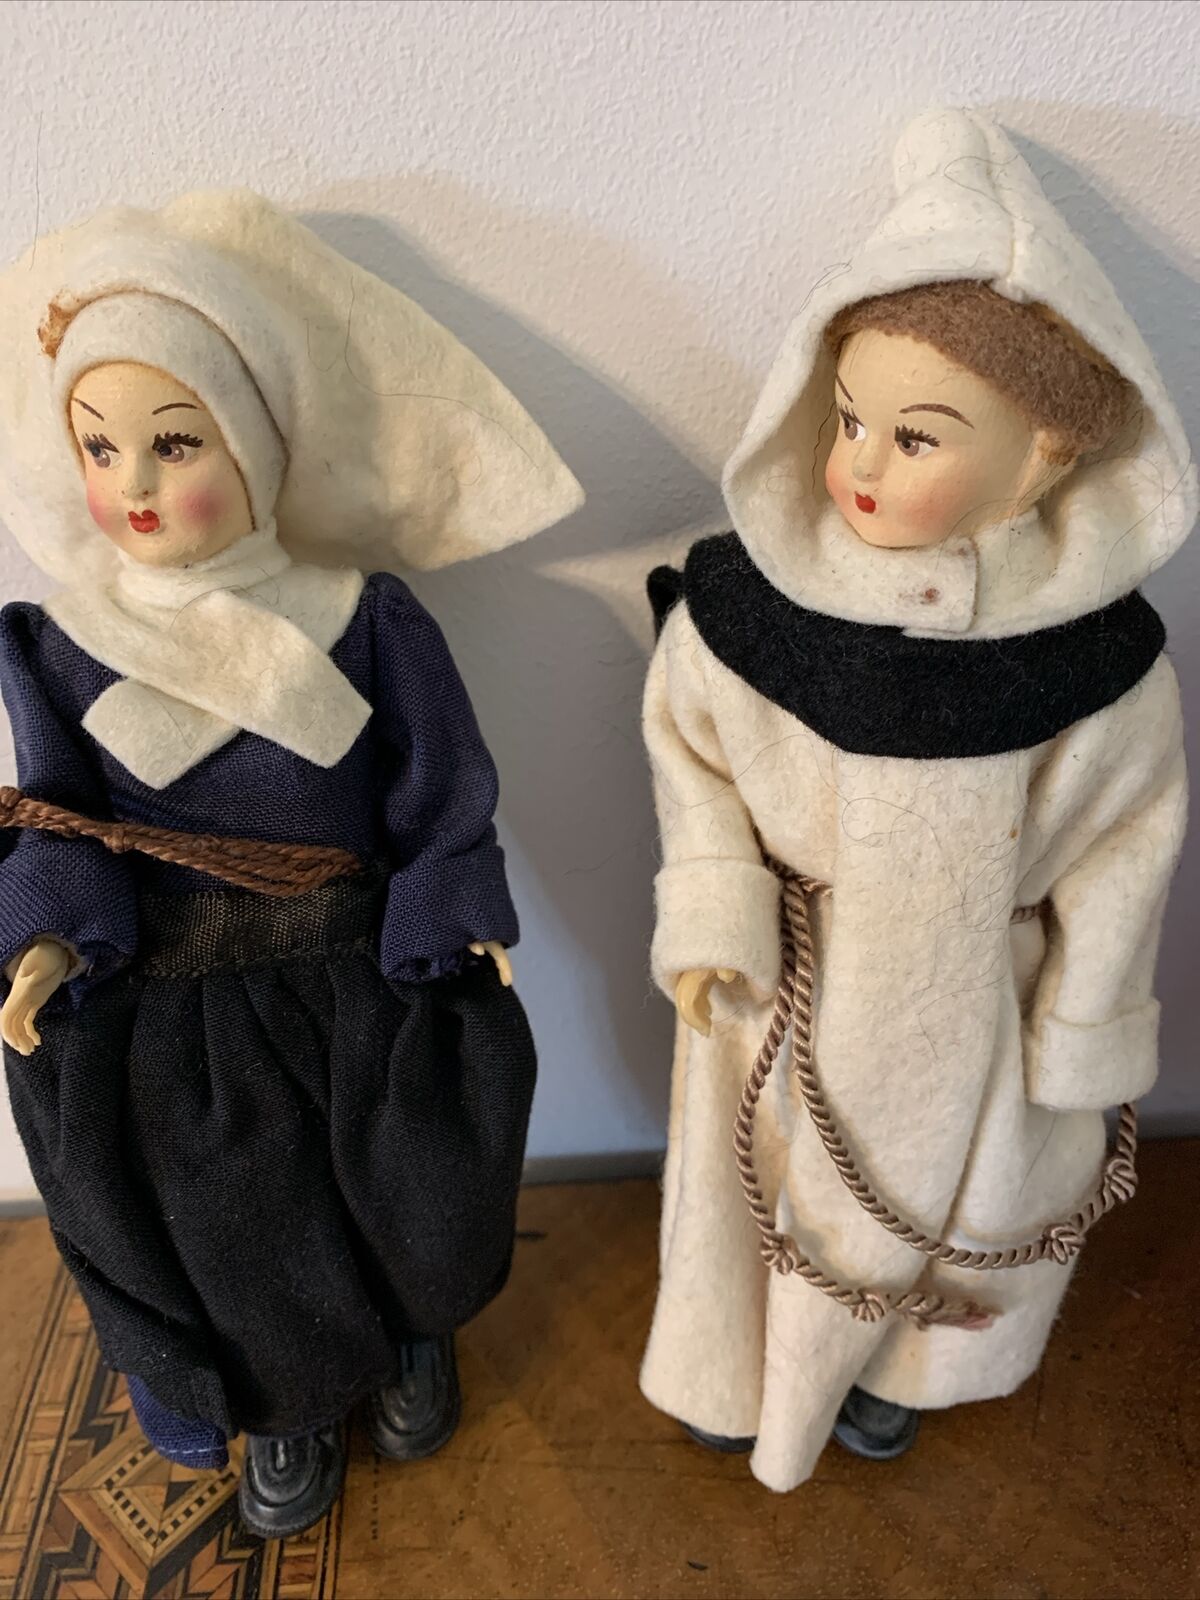 4 LENCI type 6” felt face dolls: Nun, Monk, Cardinal, Soldier of the Vatican.